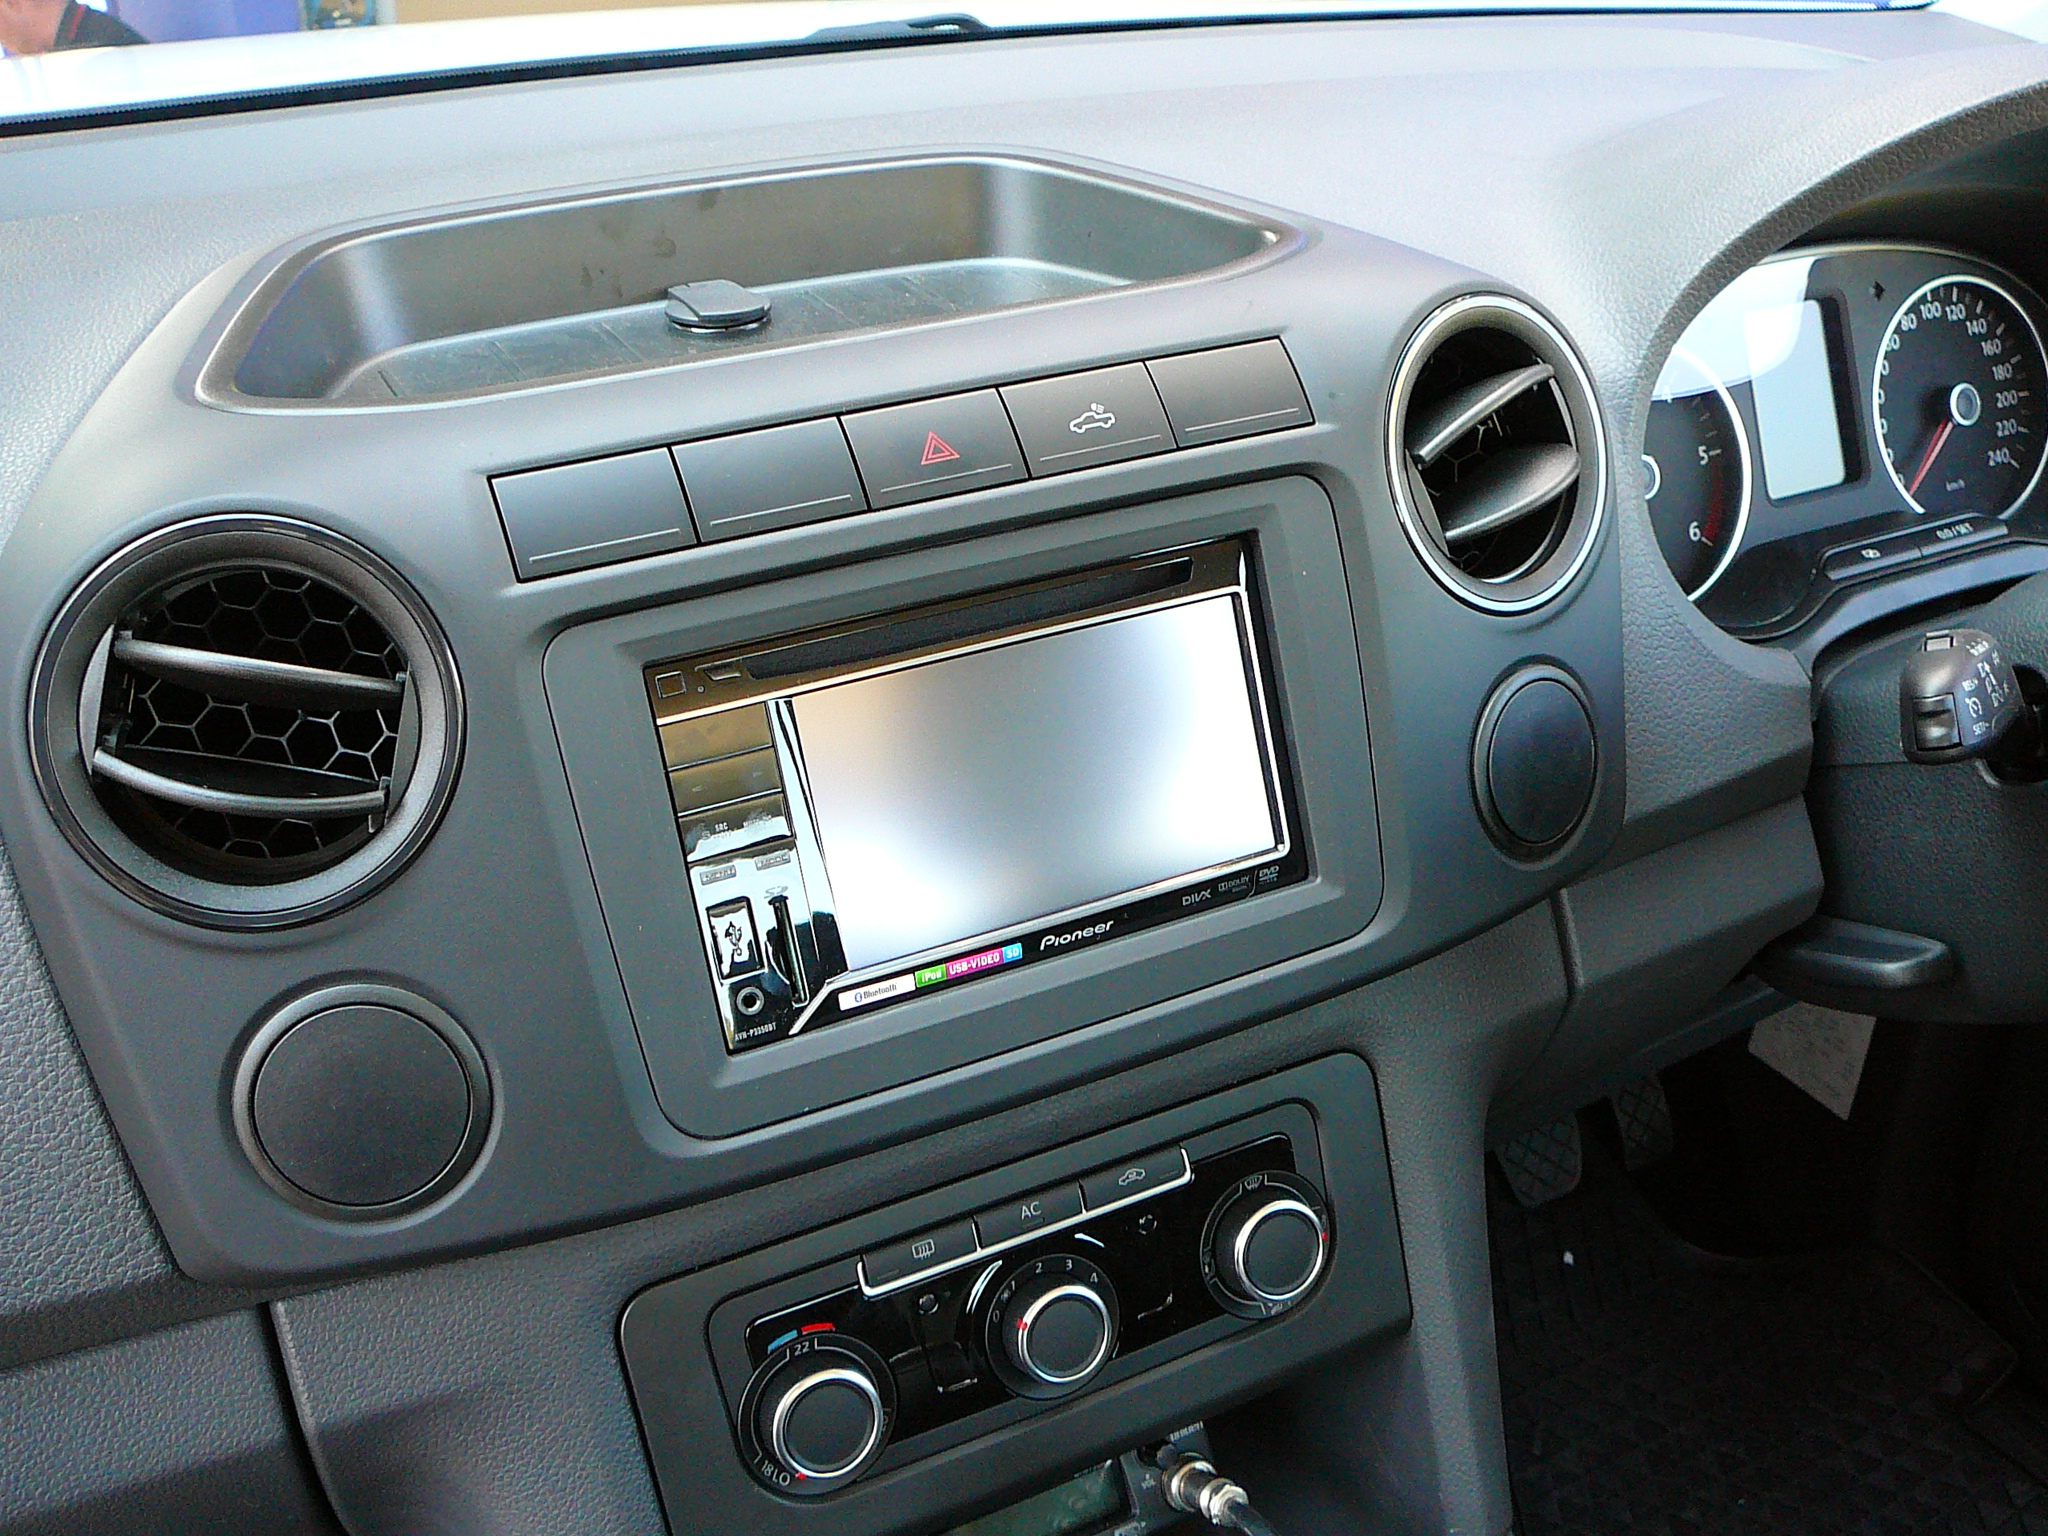 VW Amarok 2011, Pioneer AVH-P3350bt and UHF CB Radio